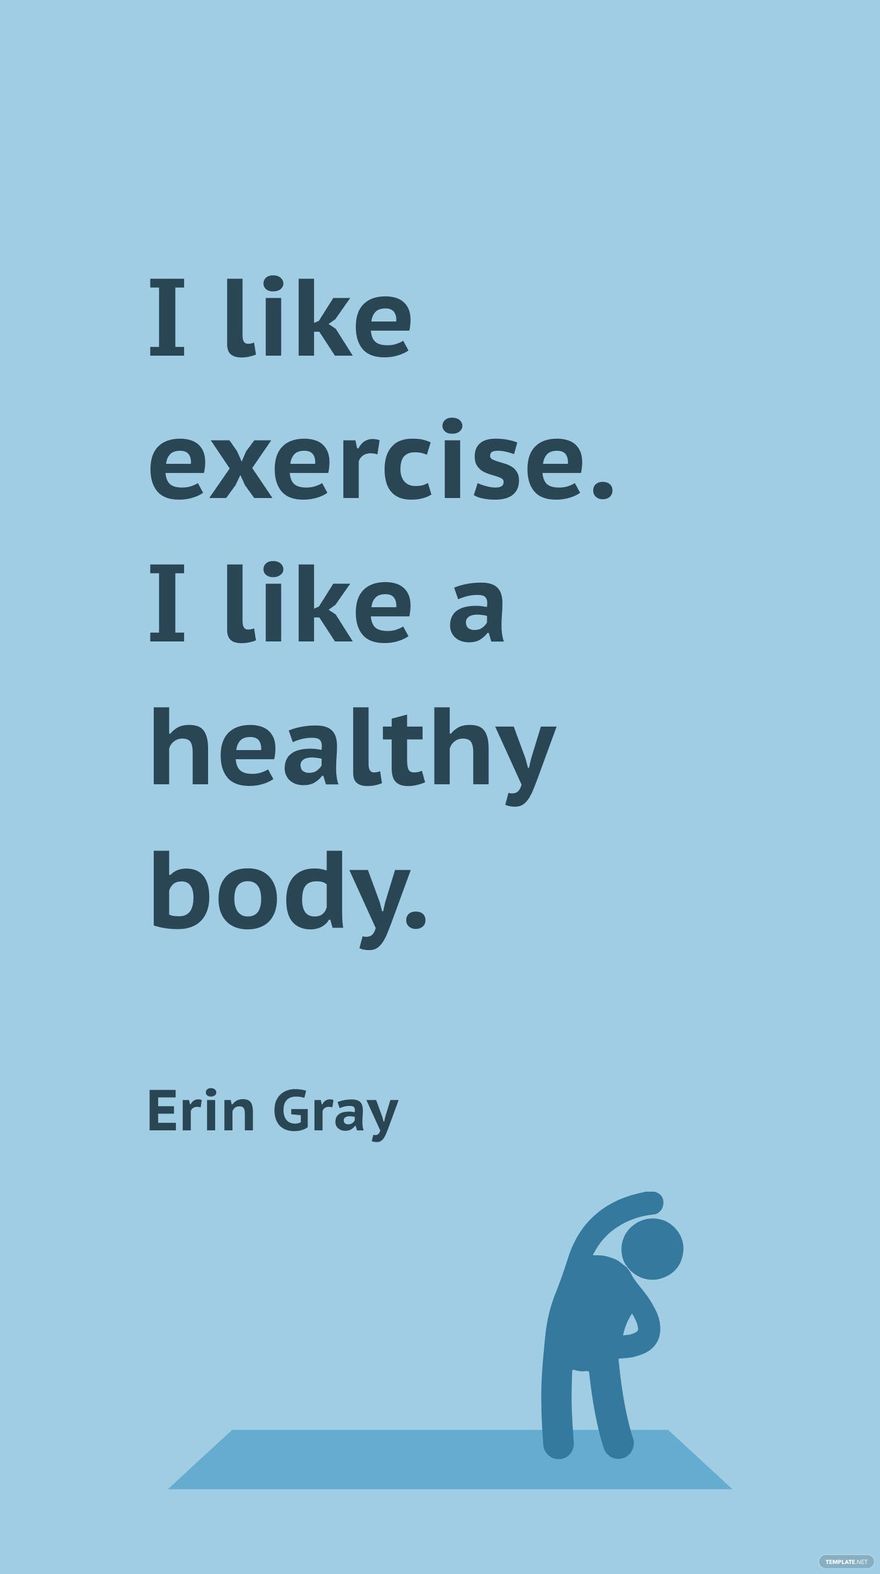 Erin Gray - I like exercise. I like a healthy body.